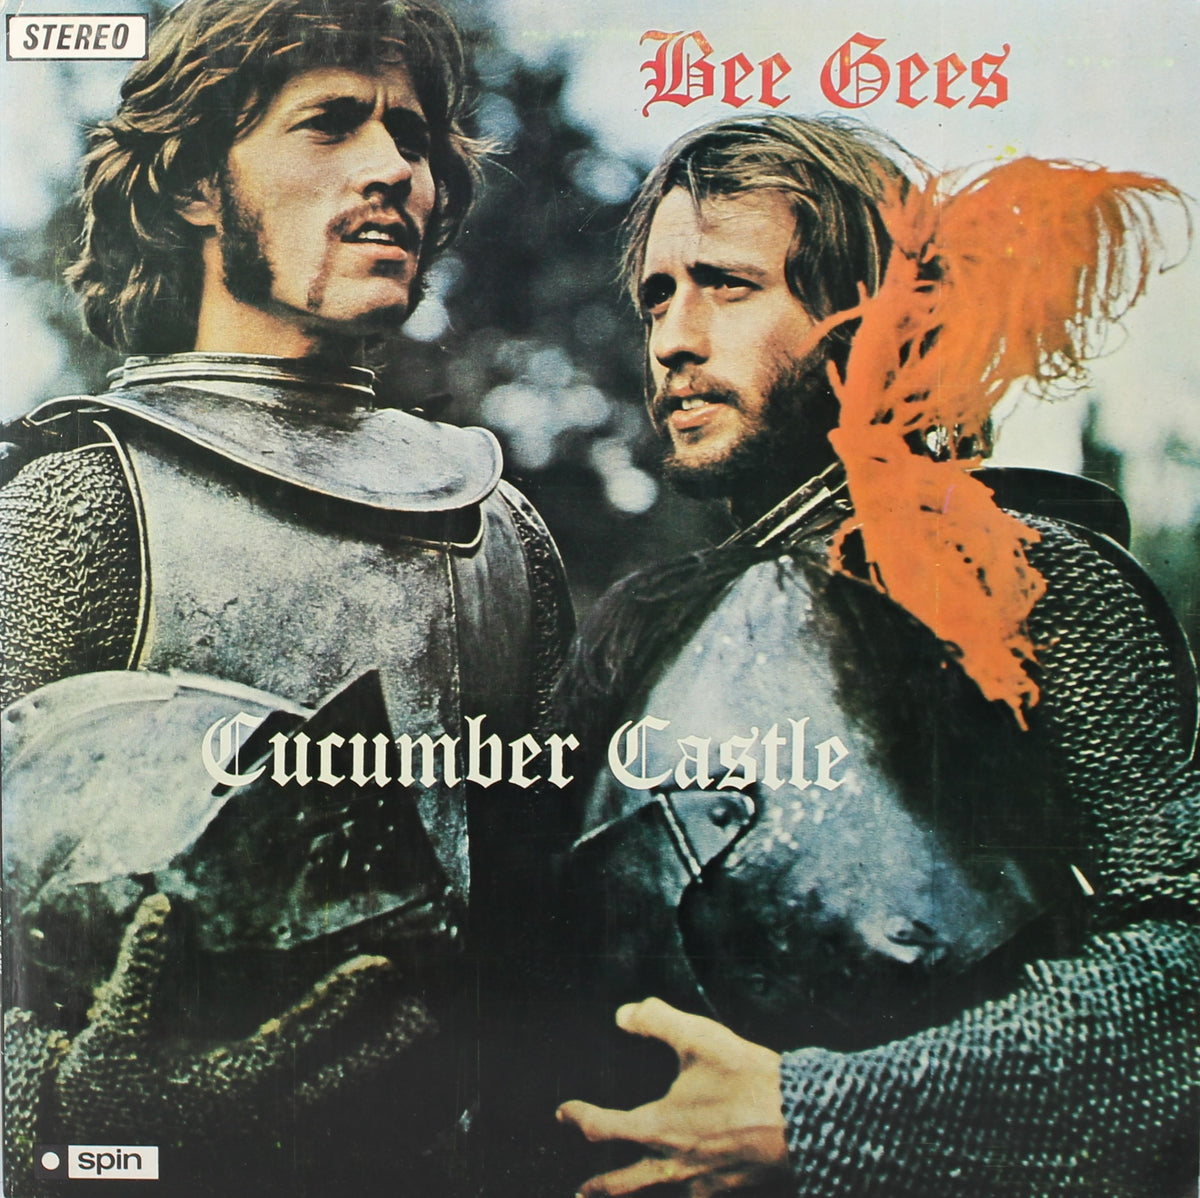 Bee Gees – Cucumber Castle, Vinyl, LP, Album, Stereo, Gatefold, New Zealand 1970